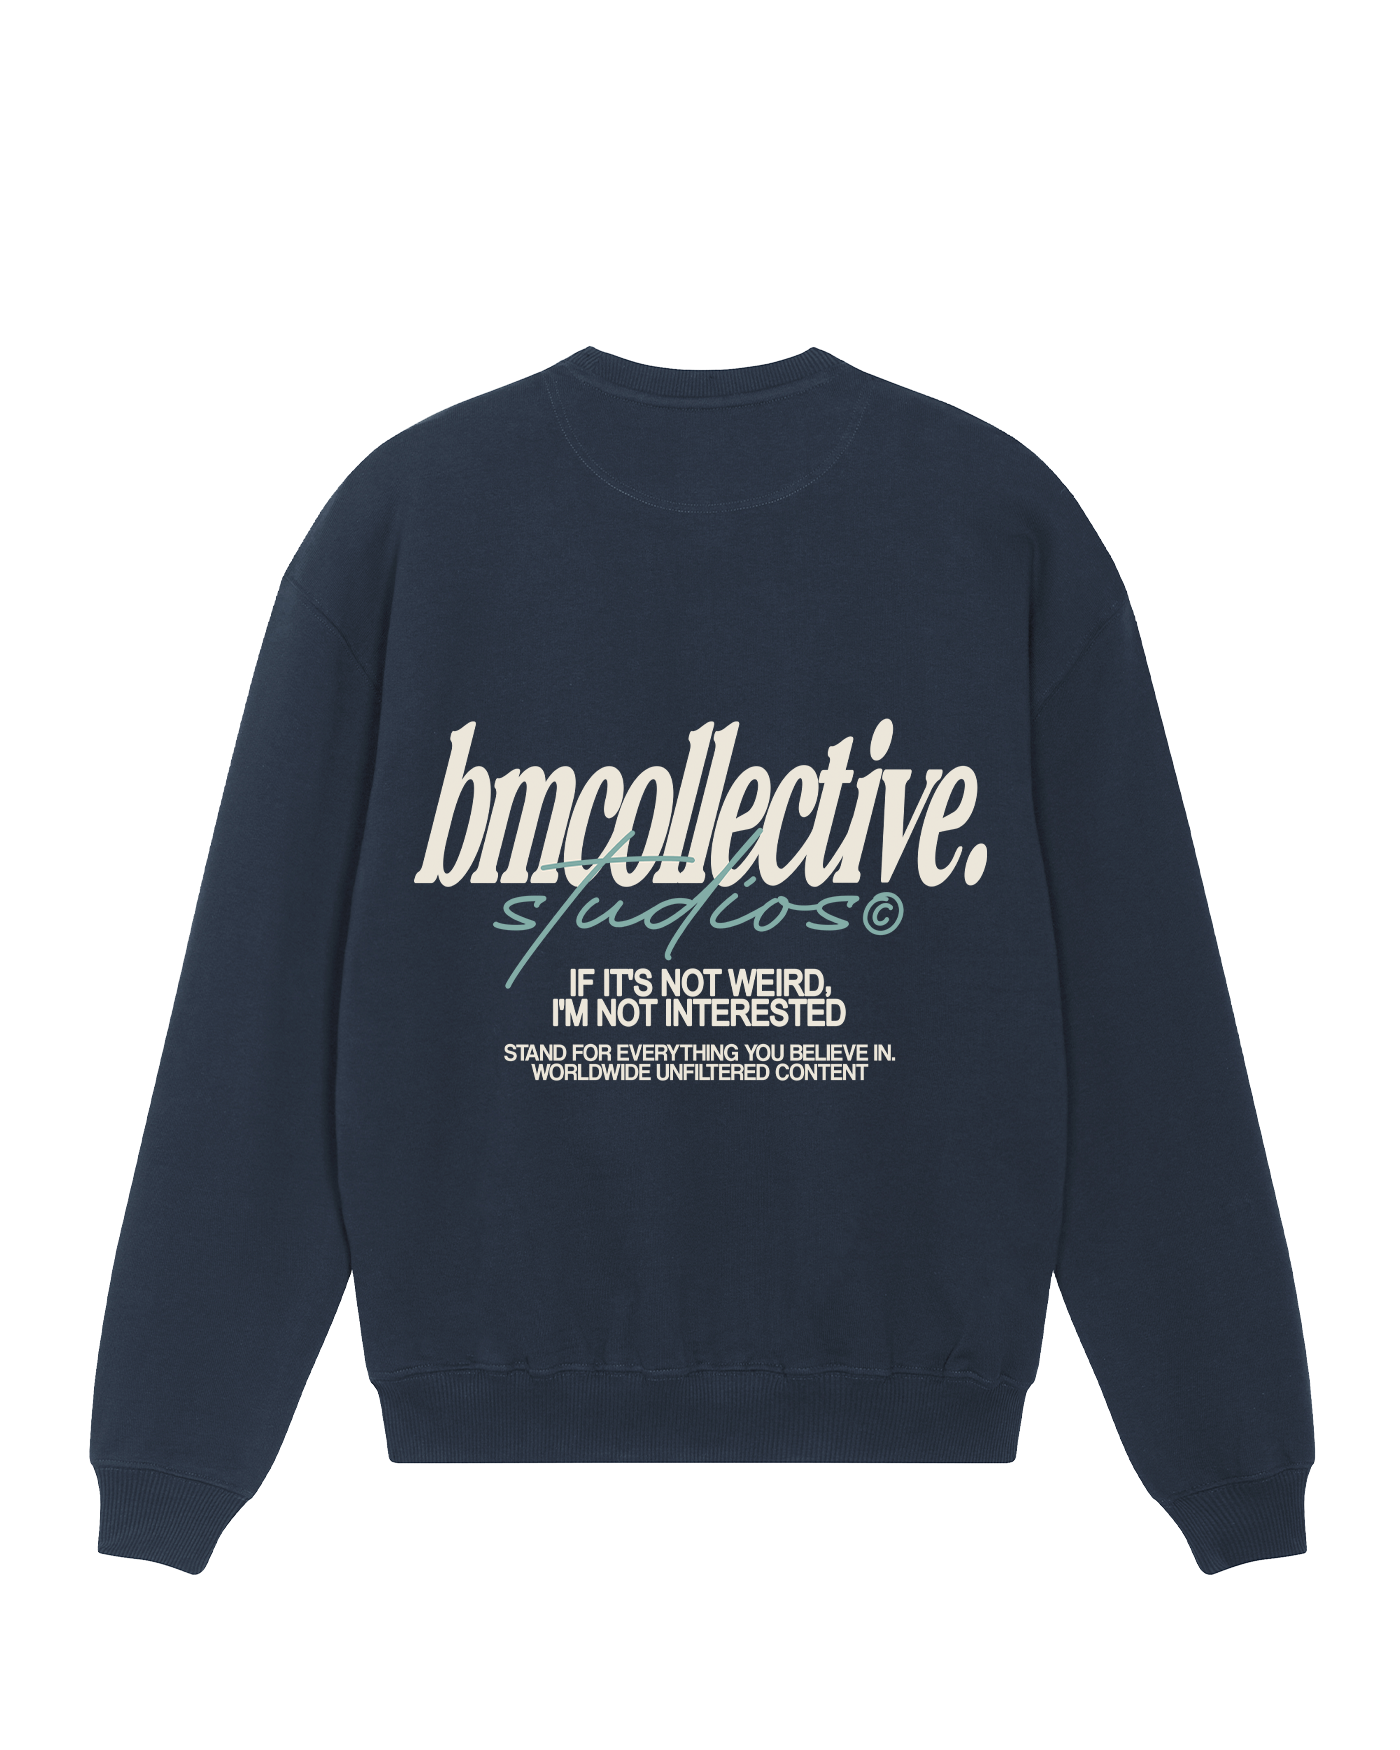 Bmcollective Studios Sweatshirt